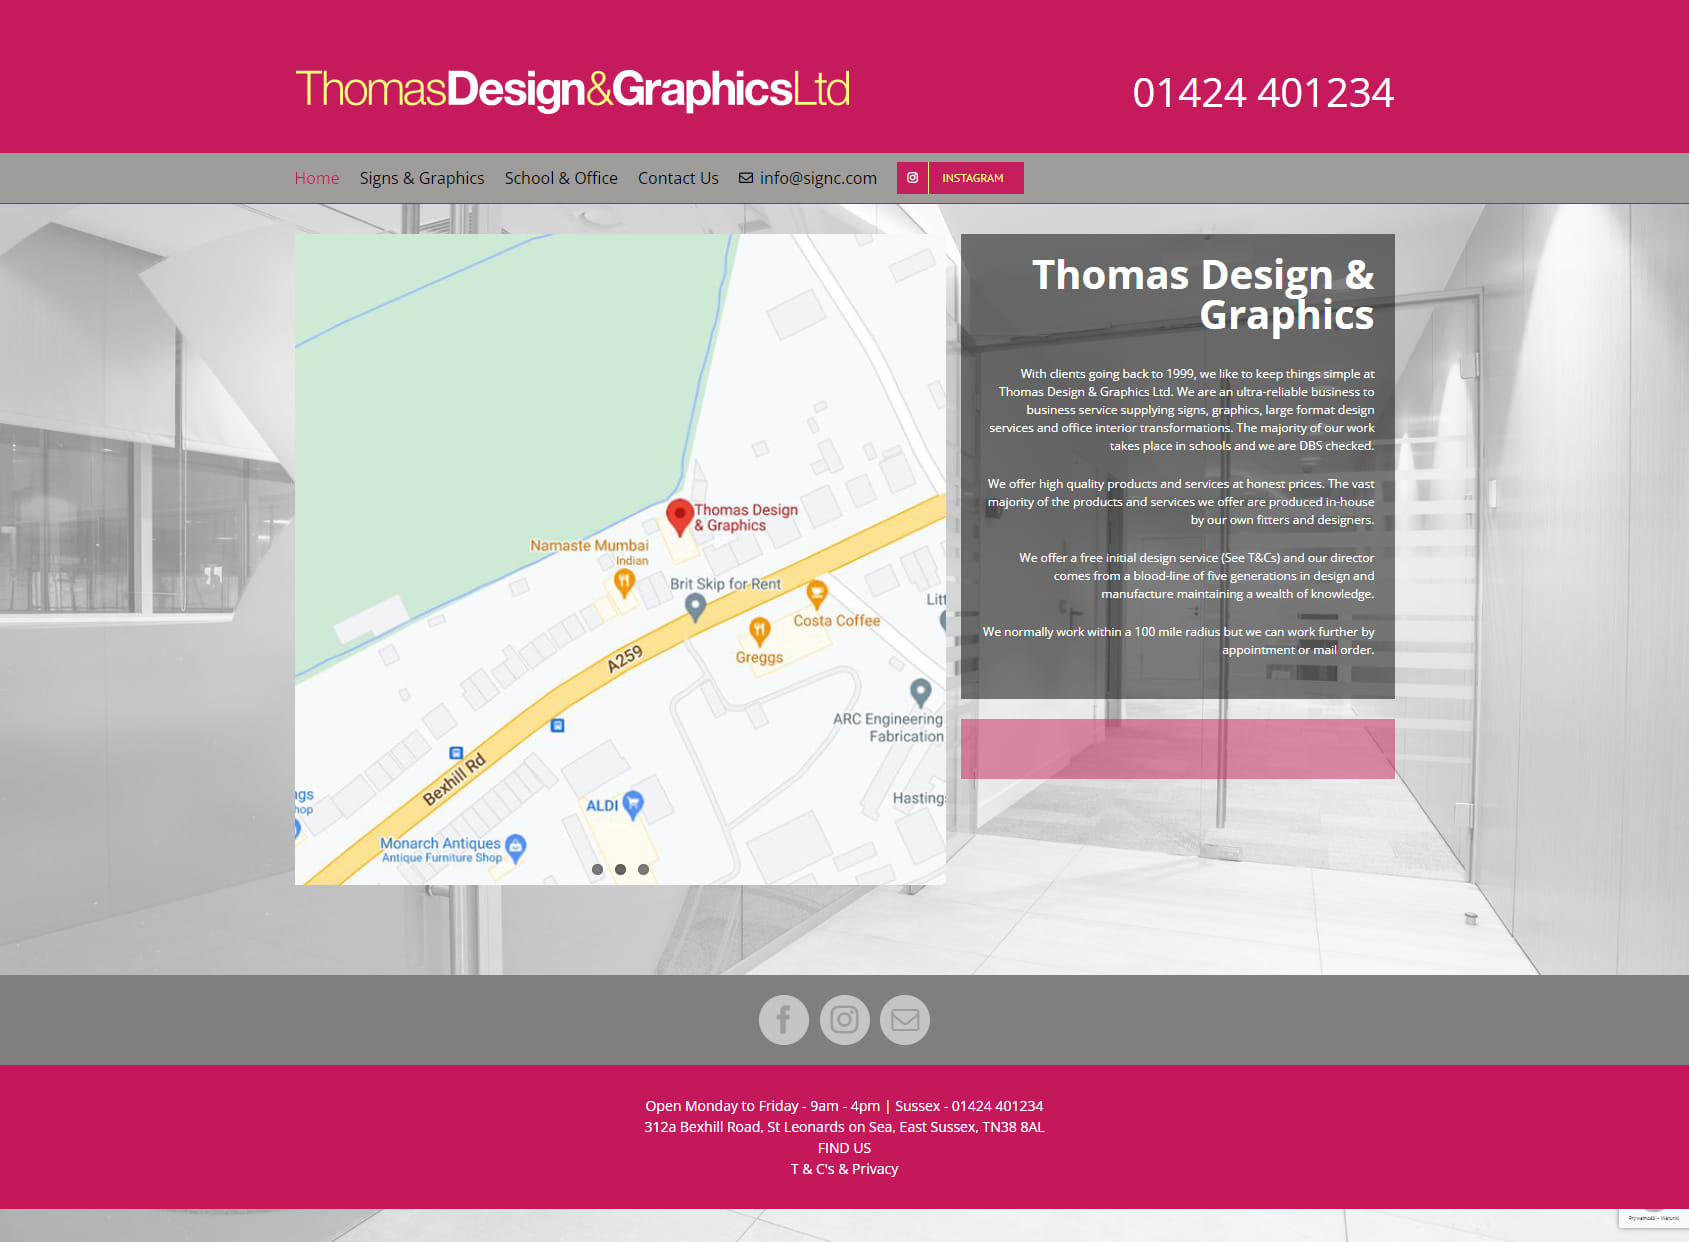 Thomas Design & Graphics Ltd